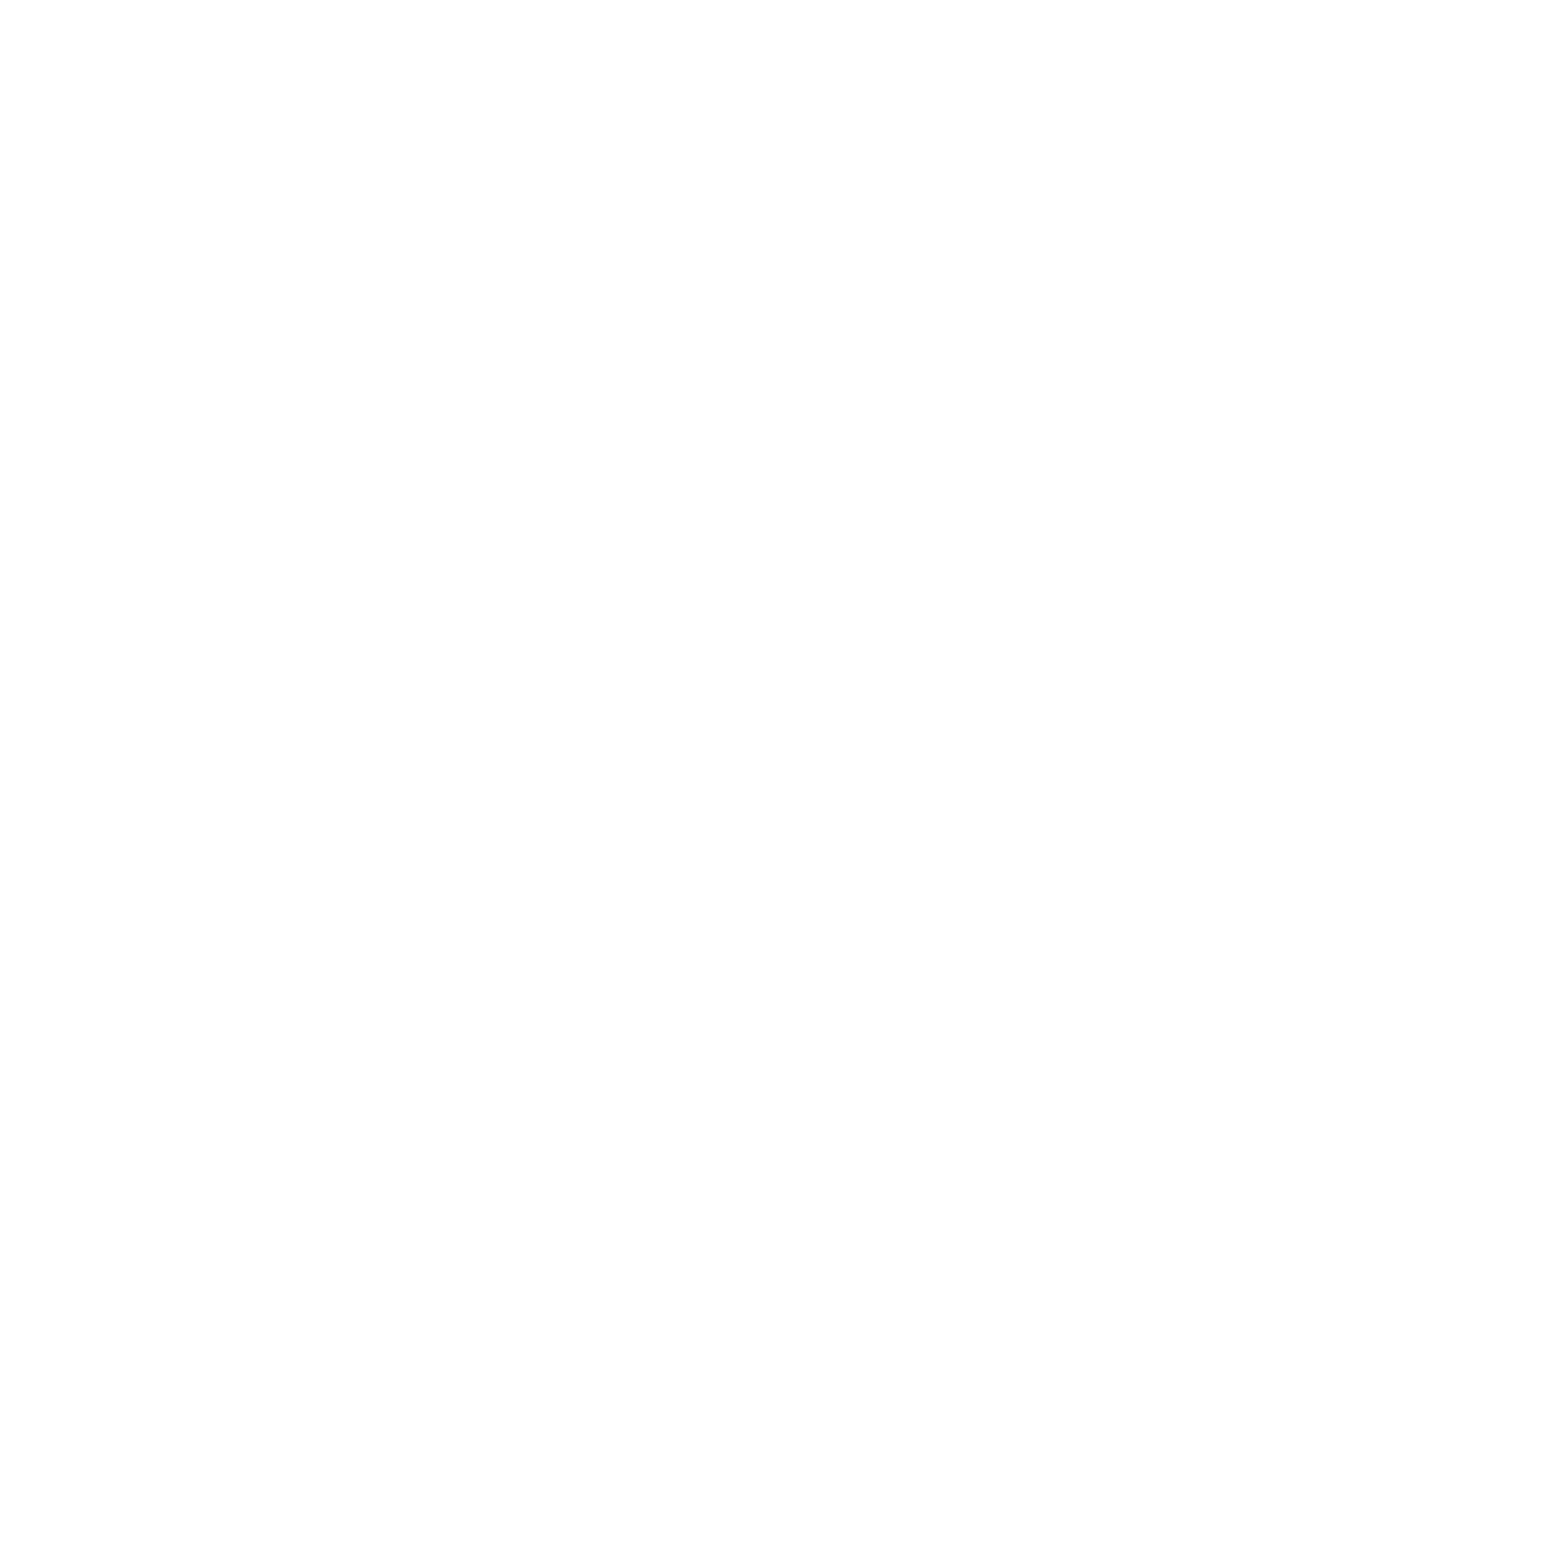 Maybank logo pour fonds sombres (PNG transparent)